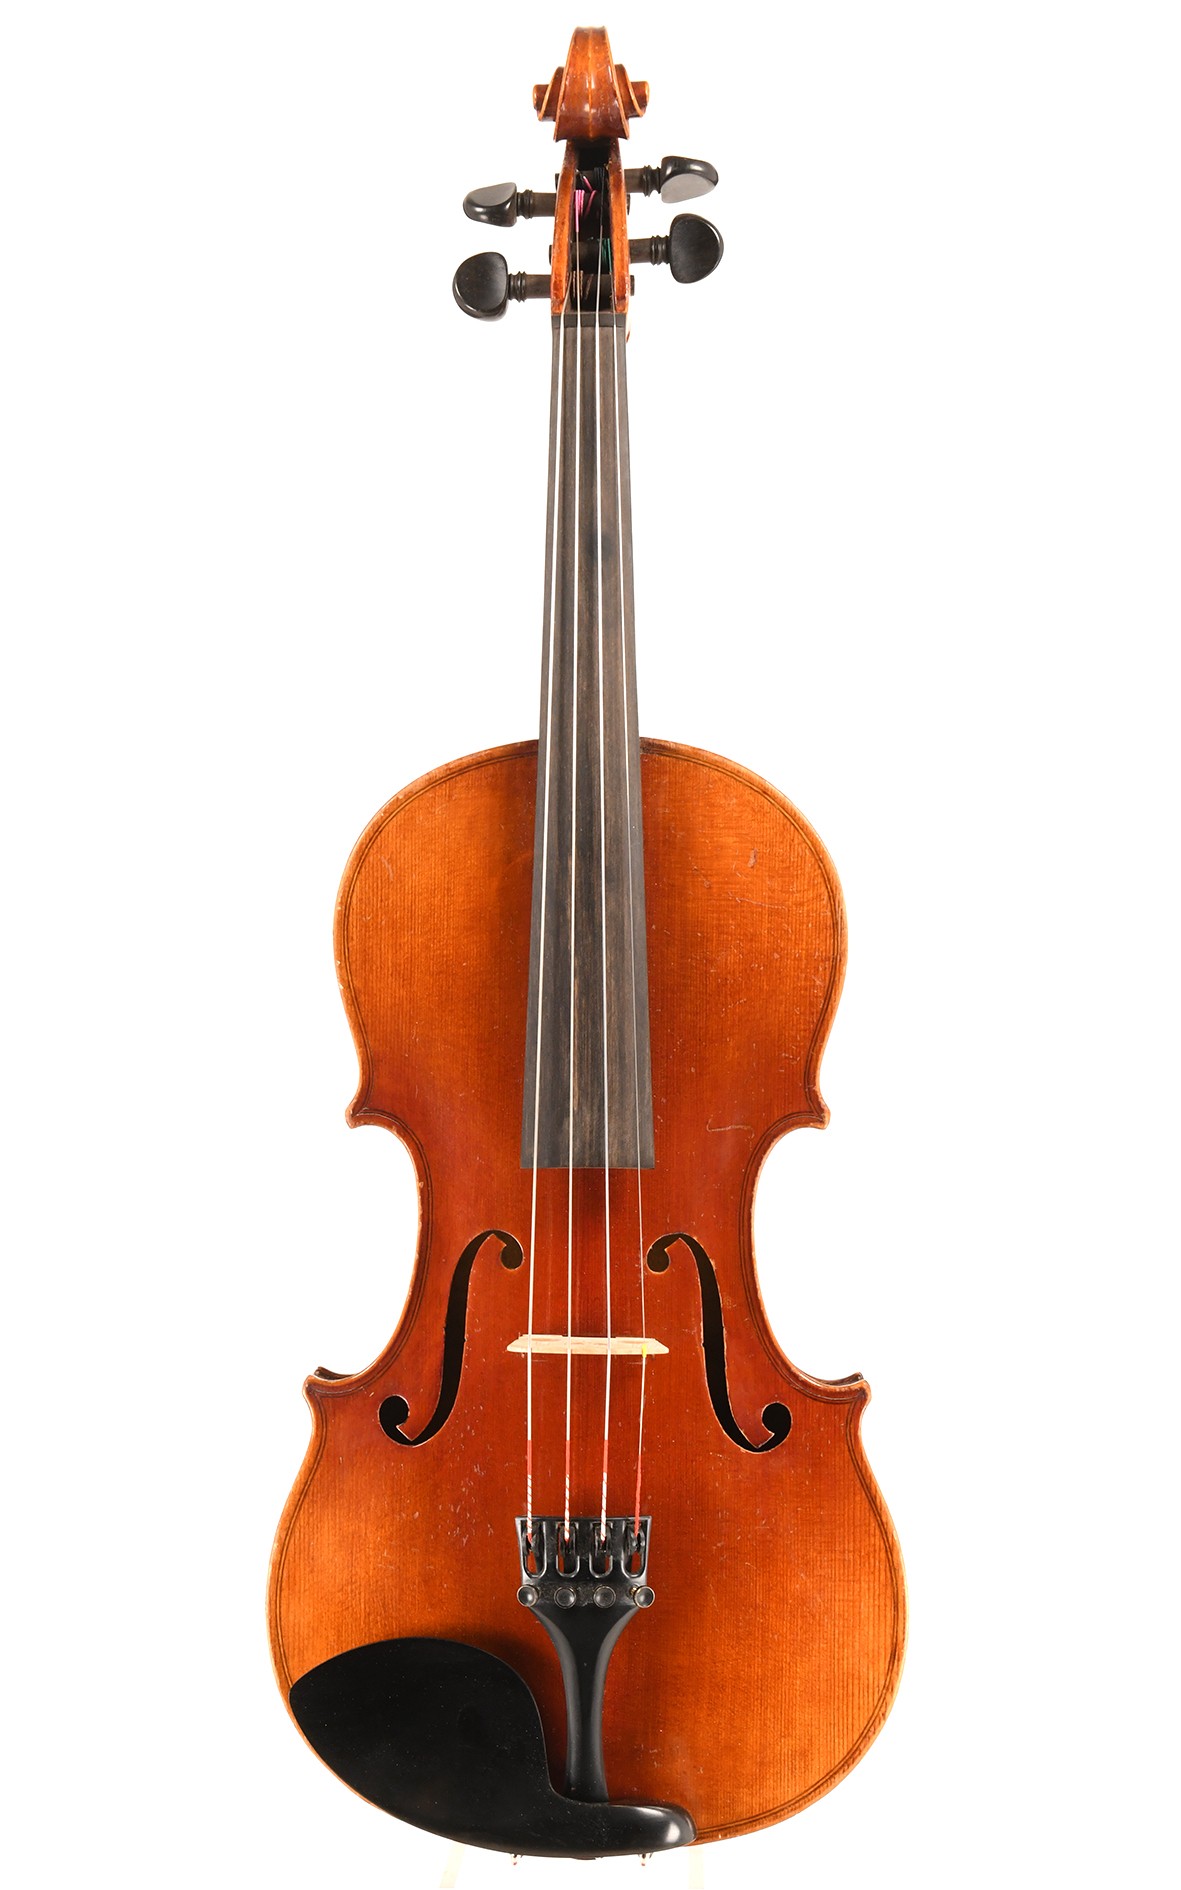 Violon allemand de qualité d'après Stradivari, circa 1920